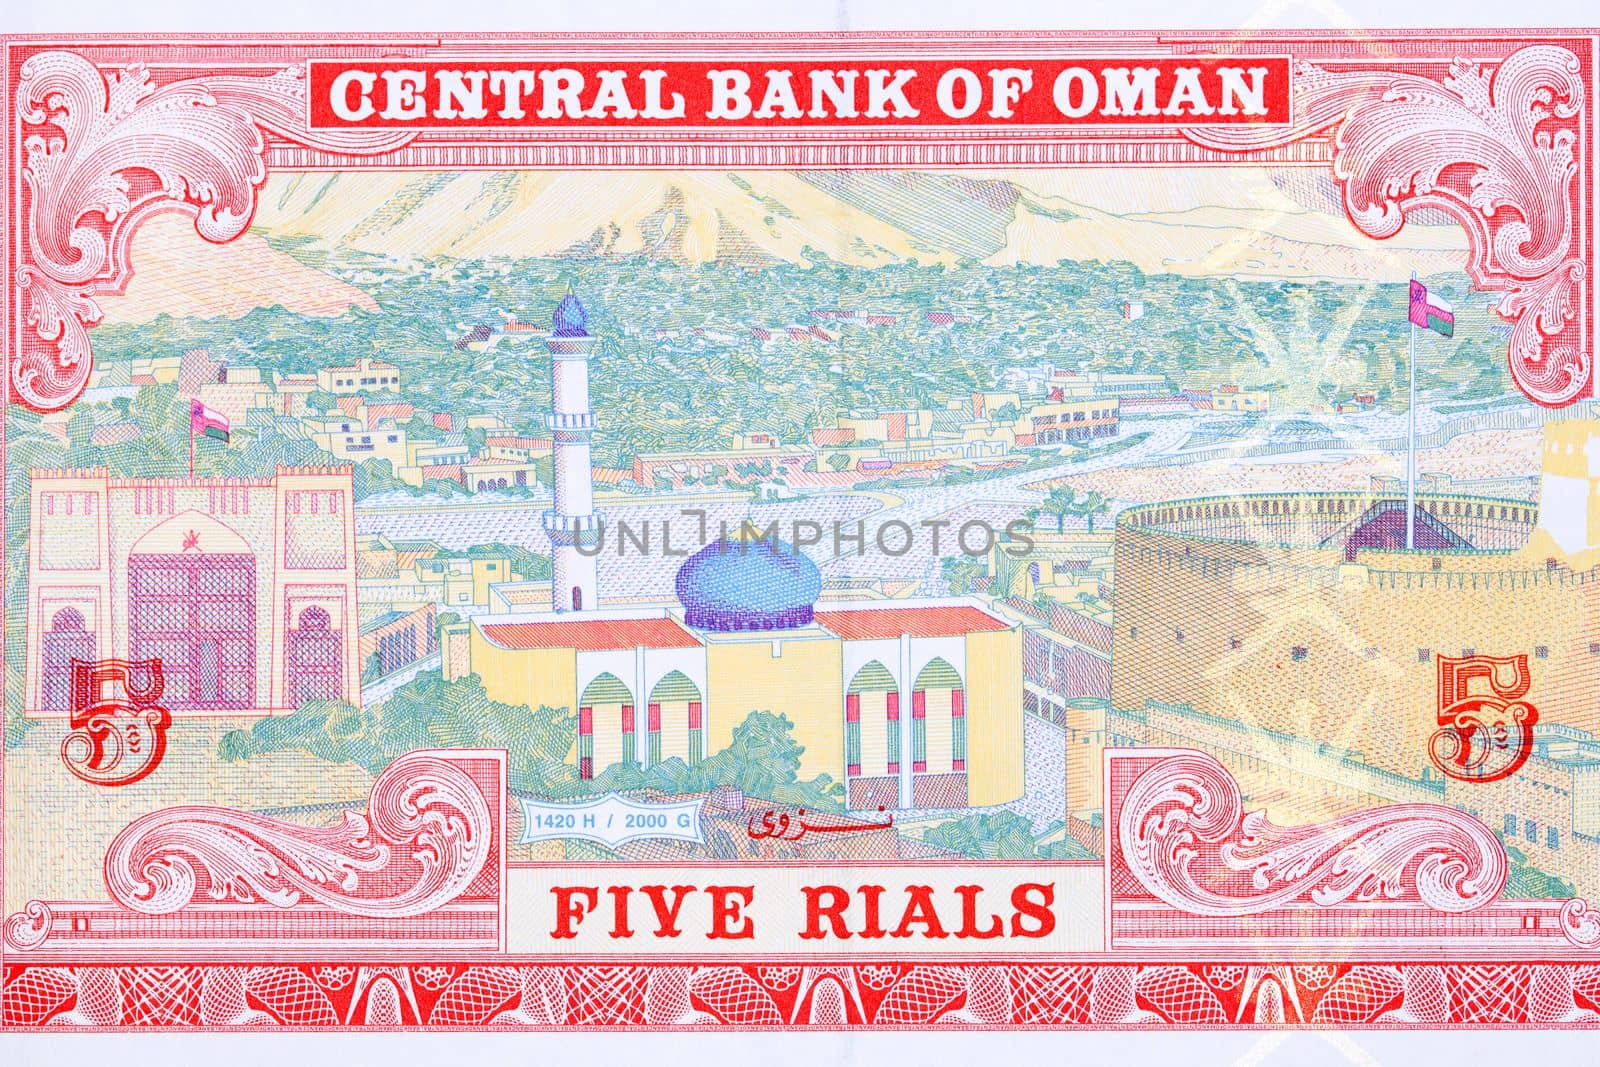 Nizwa city view from Omani money - rial